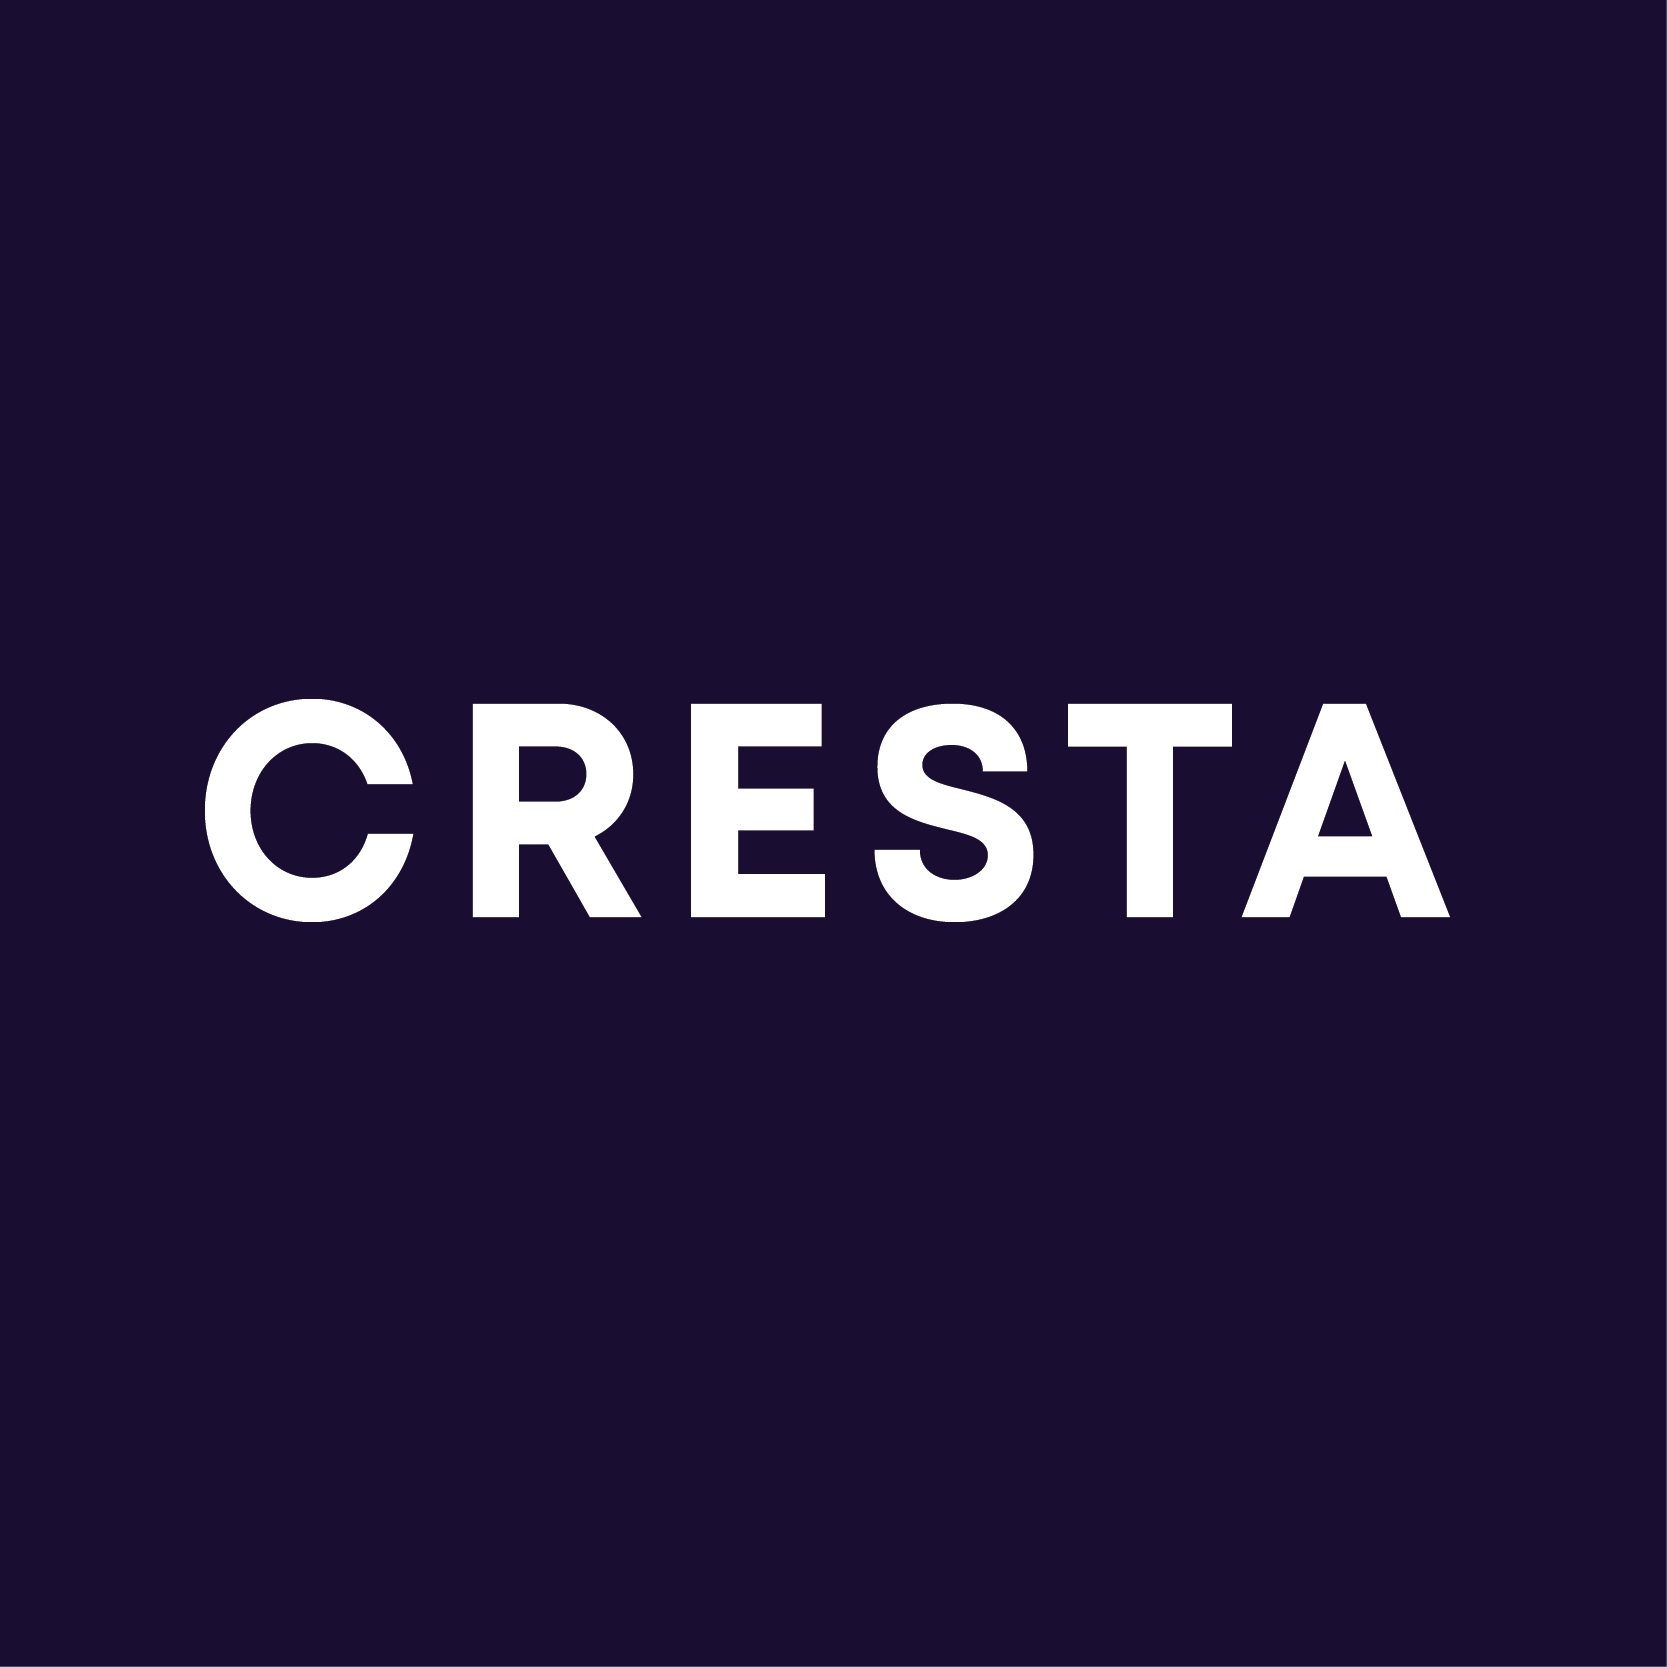 Cresta company logo